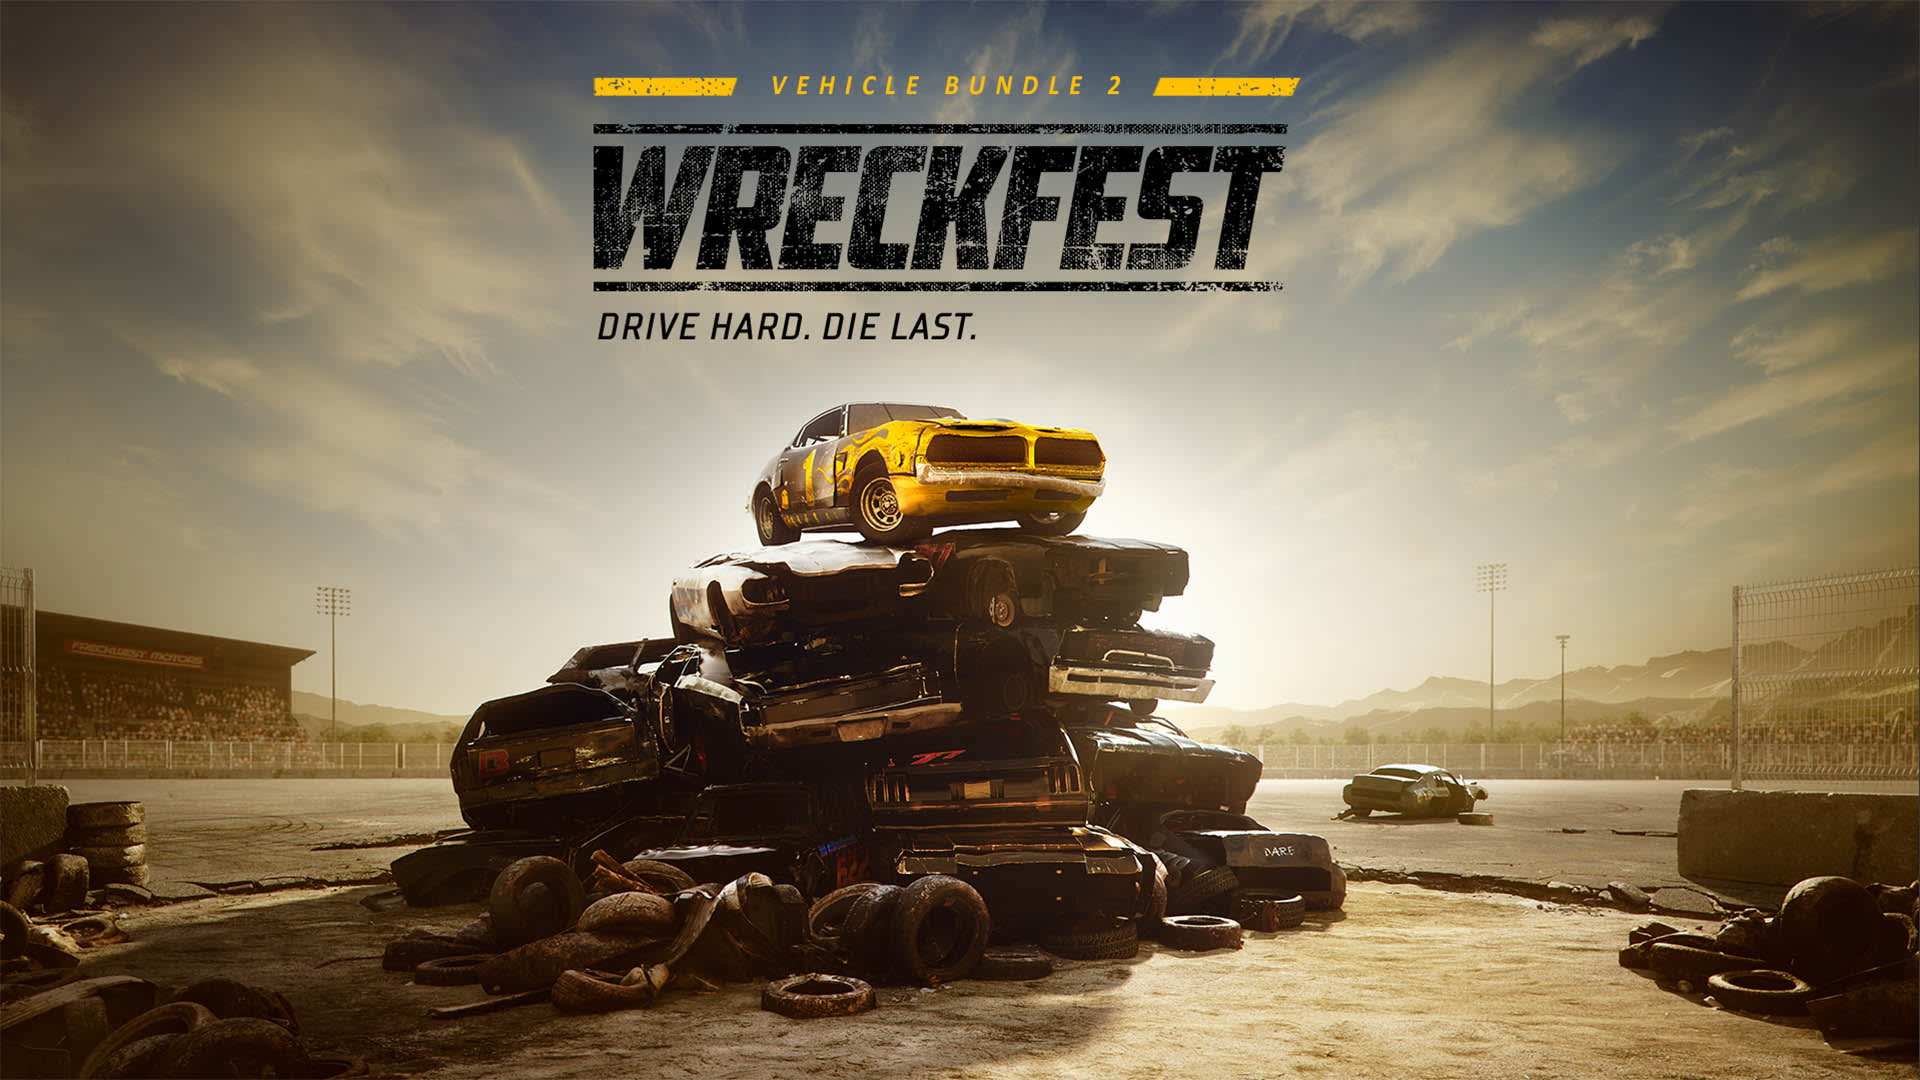 Wreckfest Vehicle Bundle 2